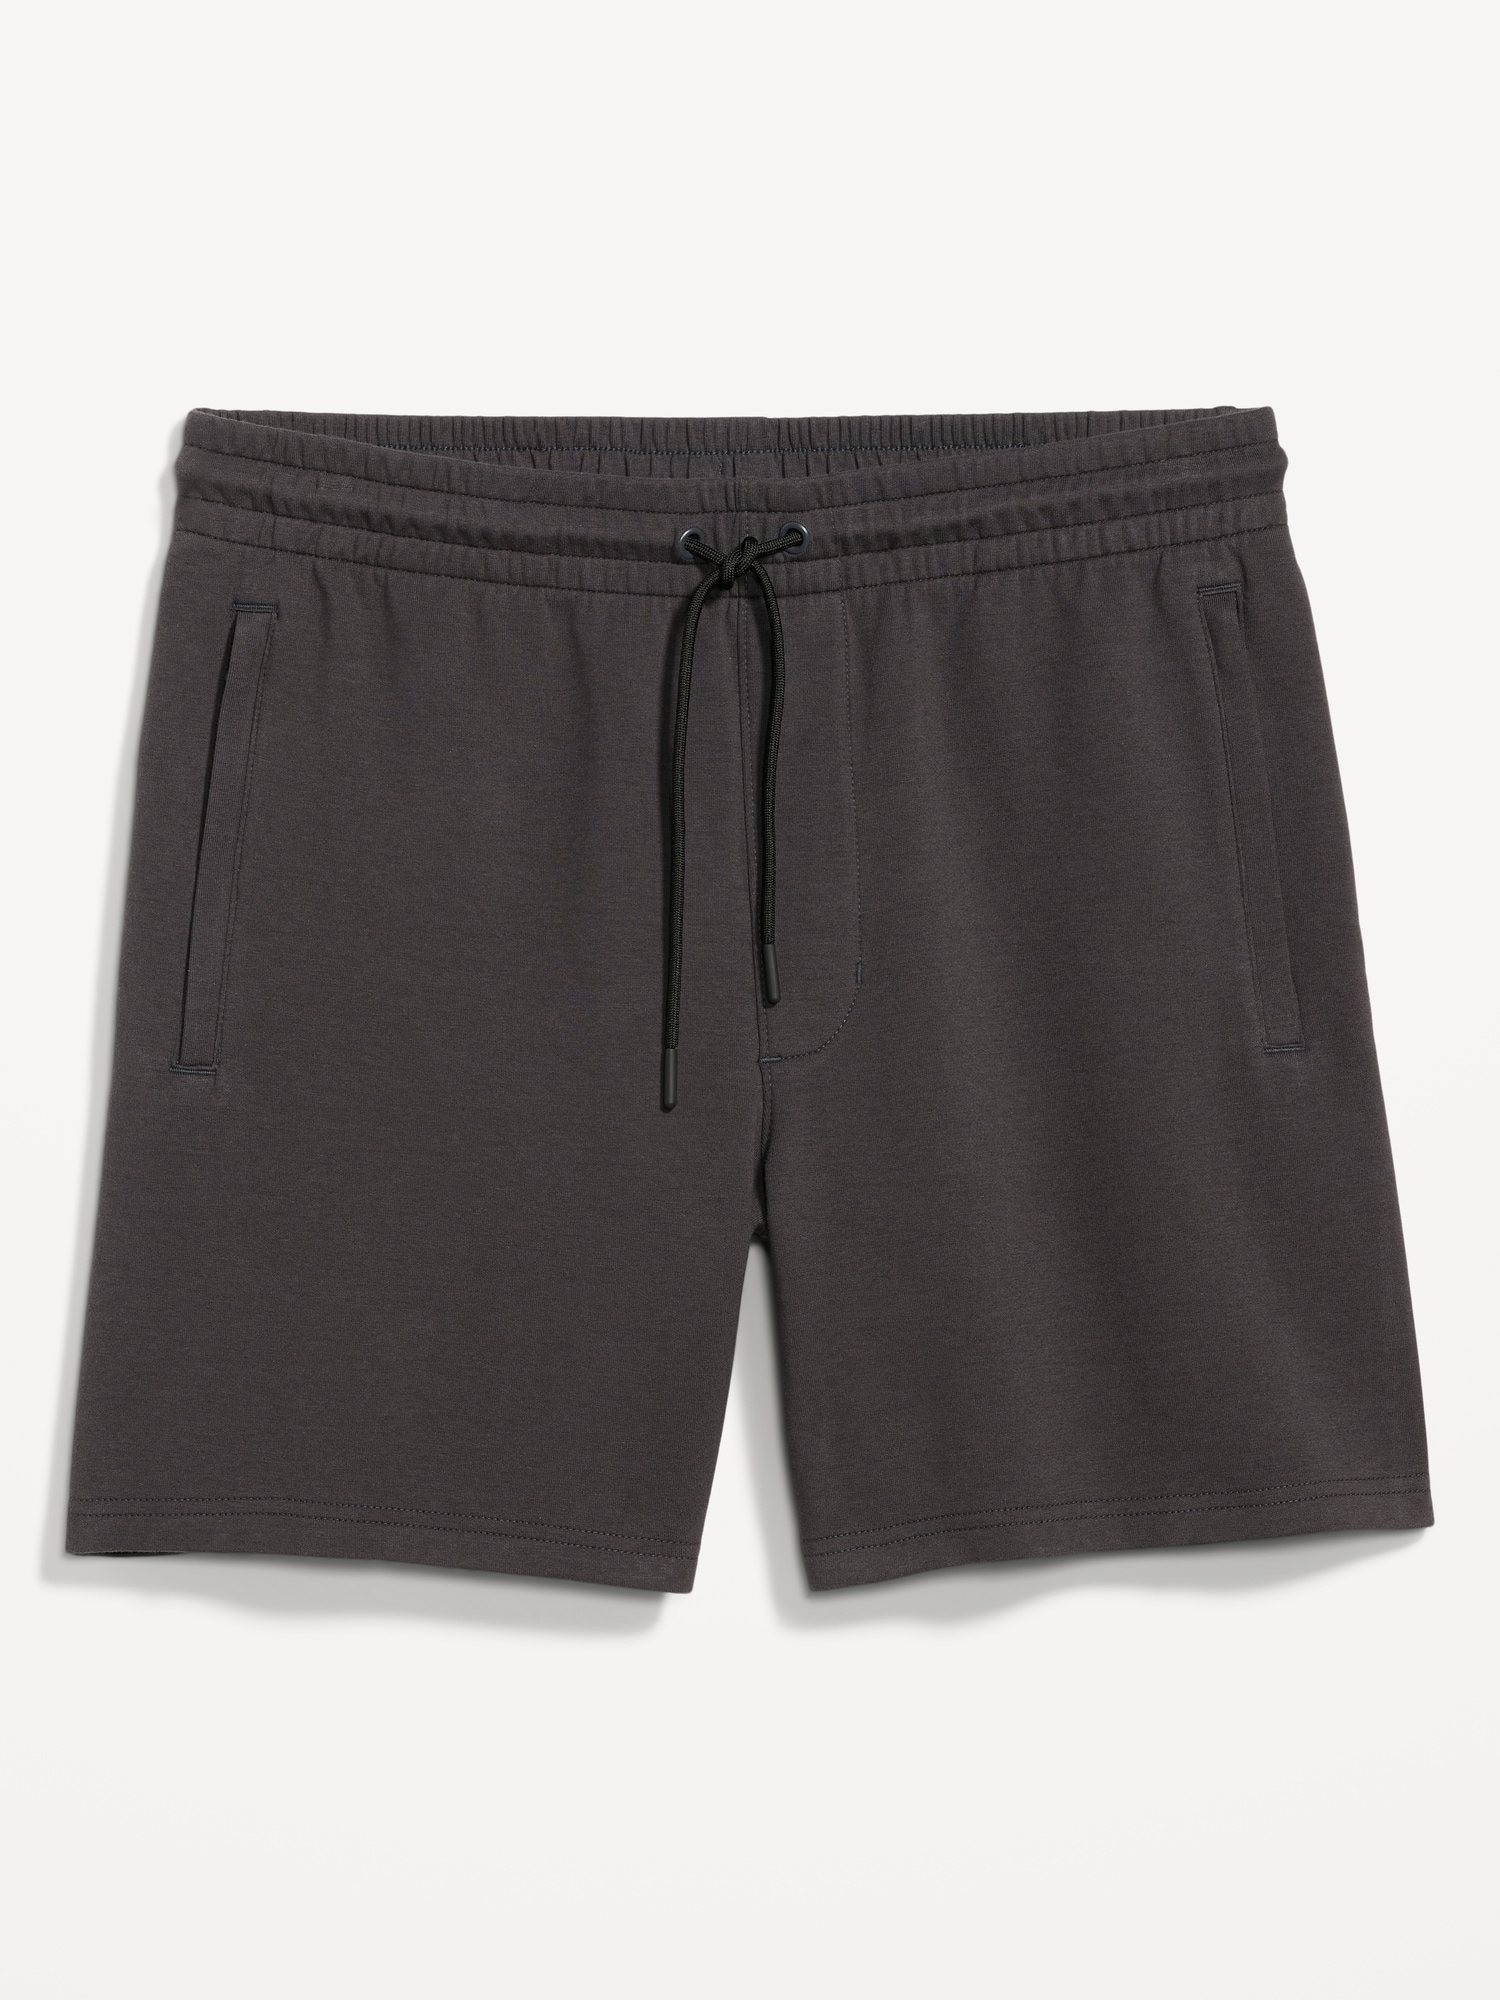 Dynamic Fleece Shorts -- 6-inch inseam